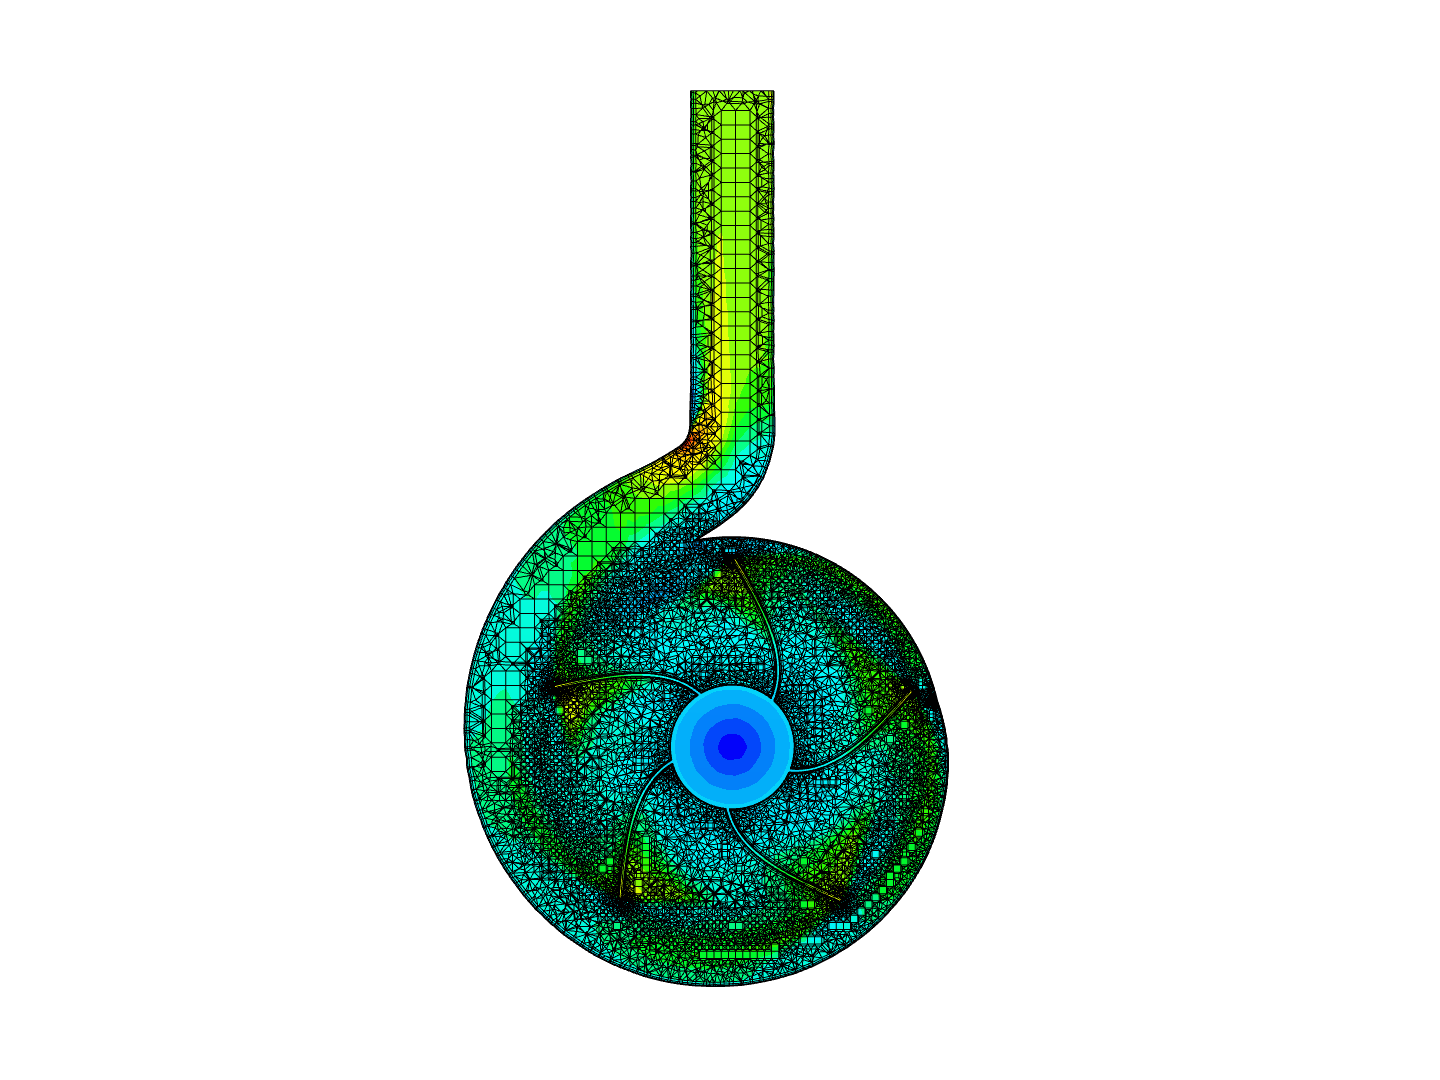 centrifugal pump simulation corsera - Copy image